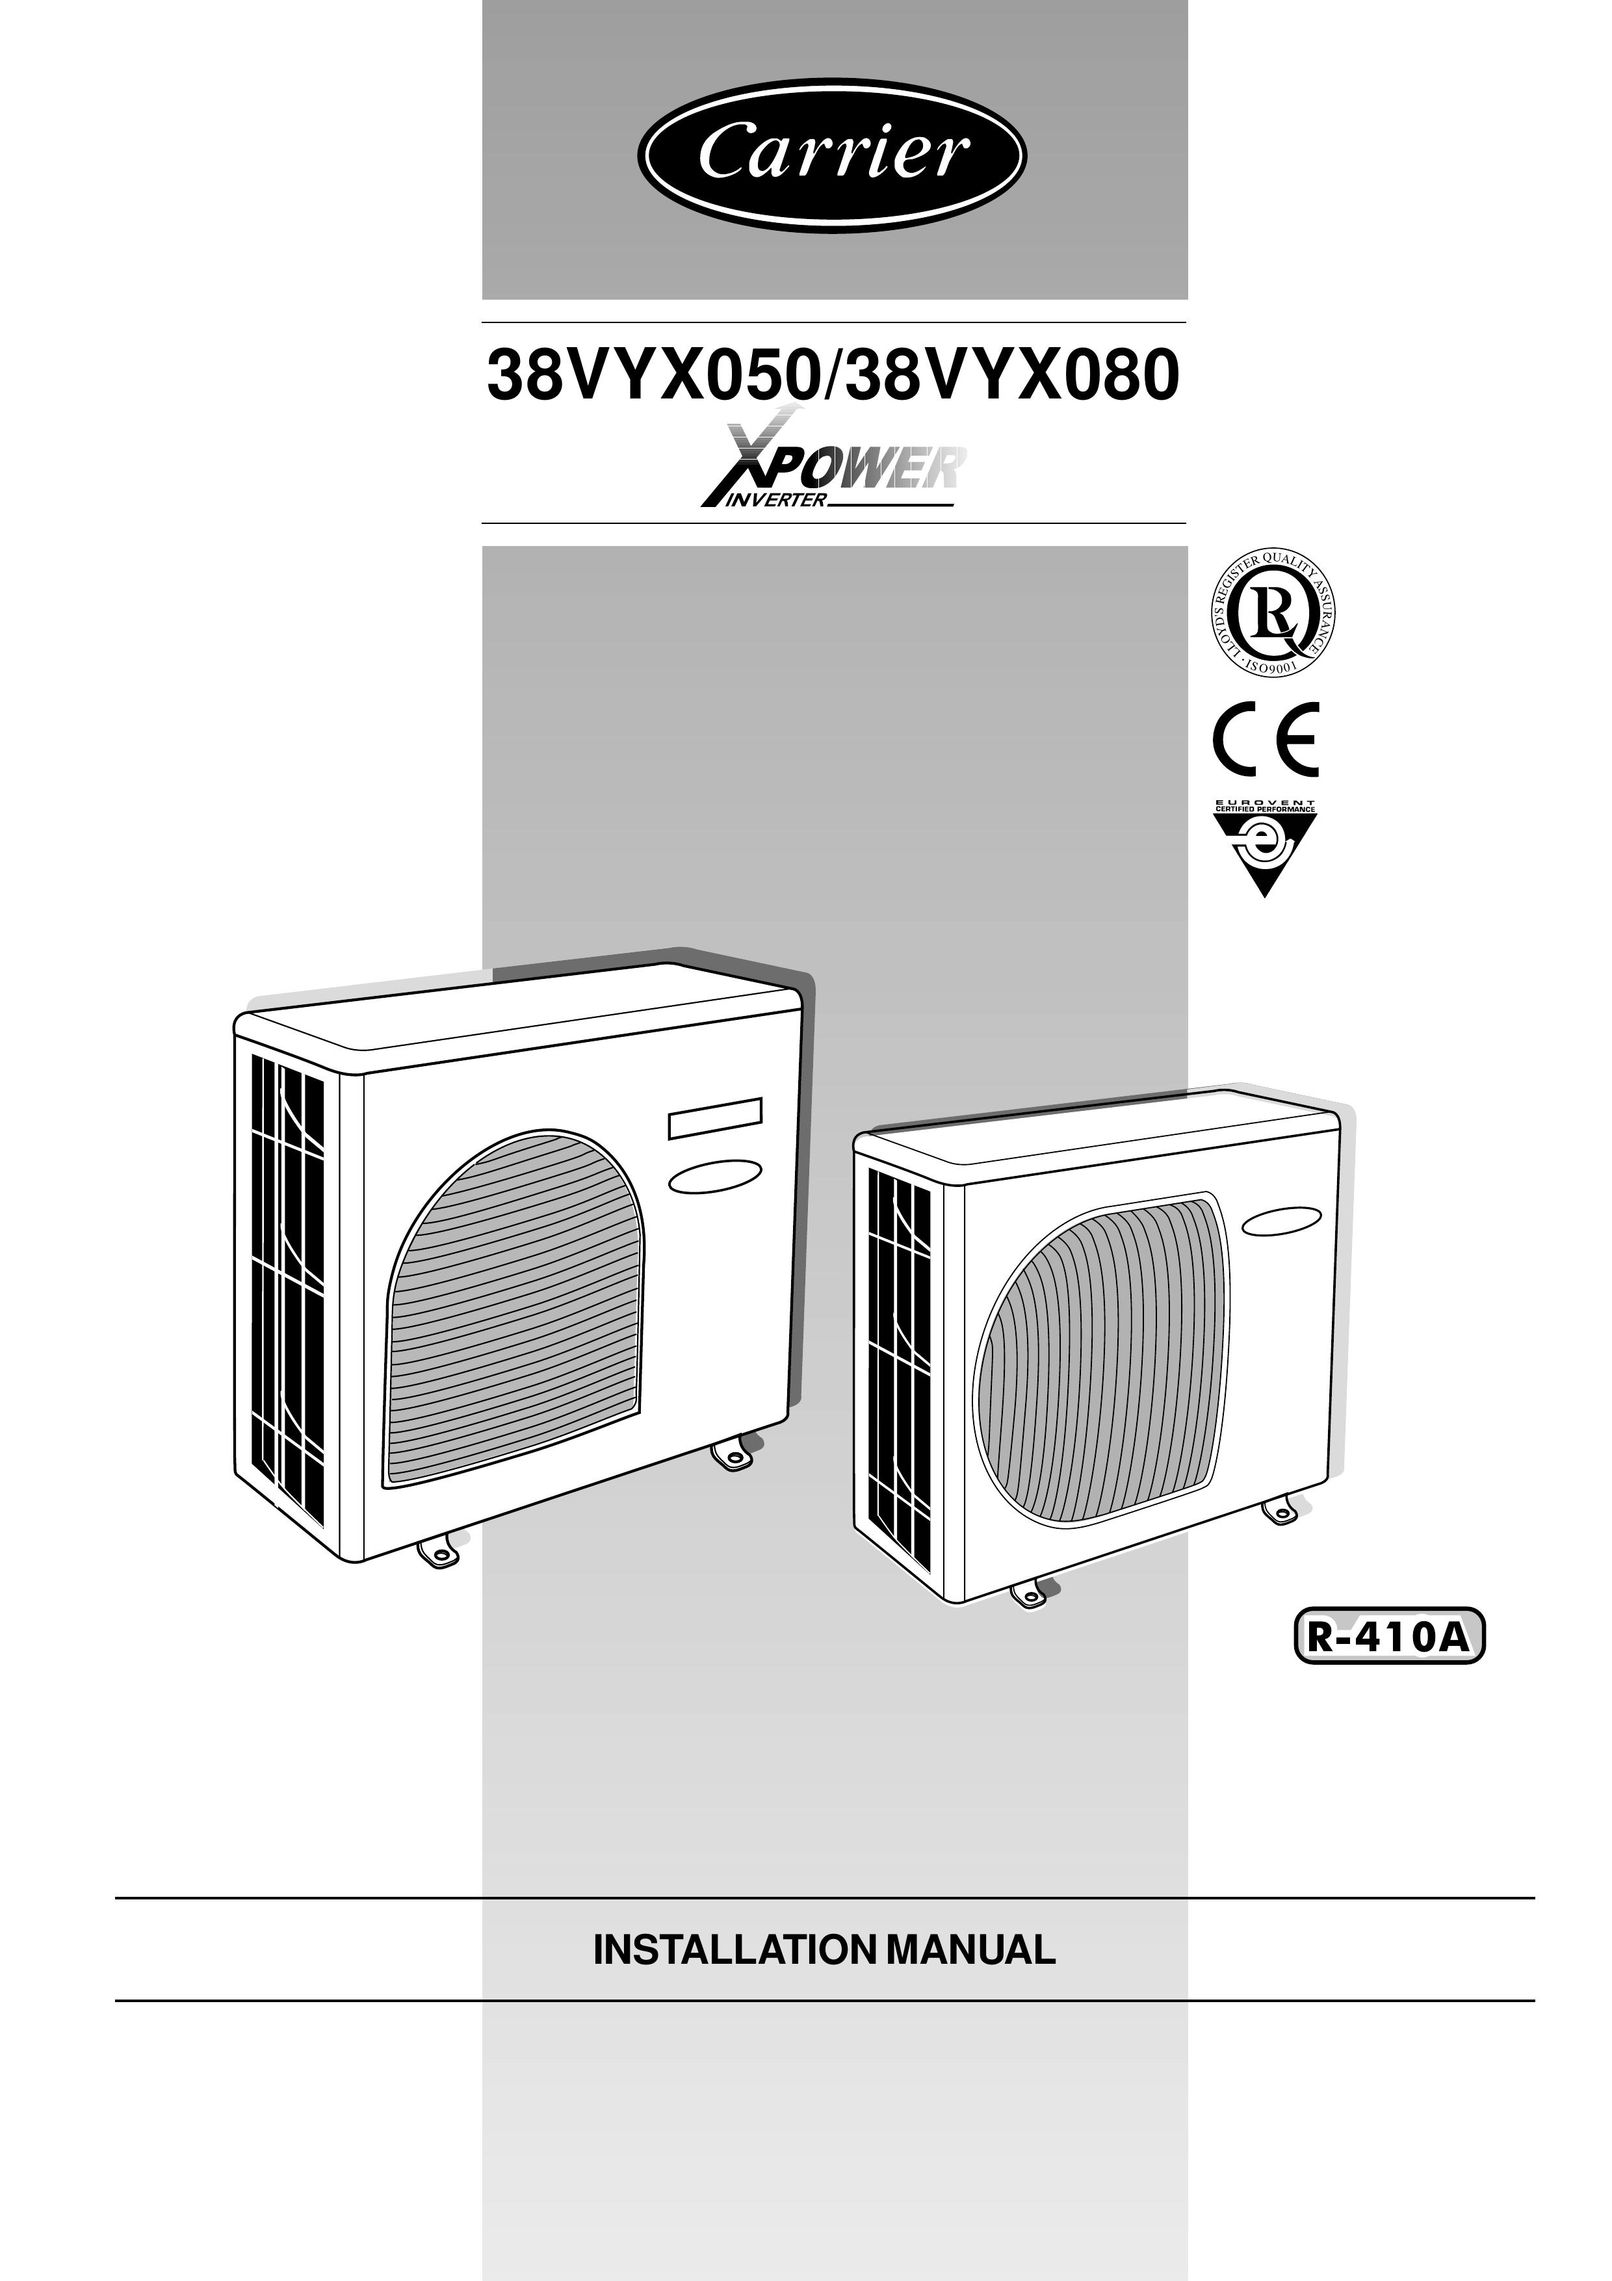 Carrier 38VYX050 Heat Pump User Manual